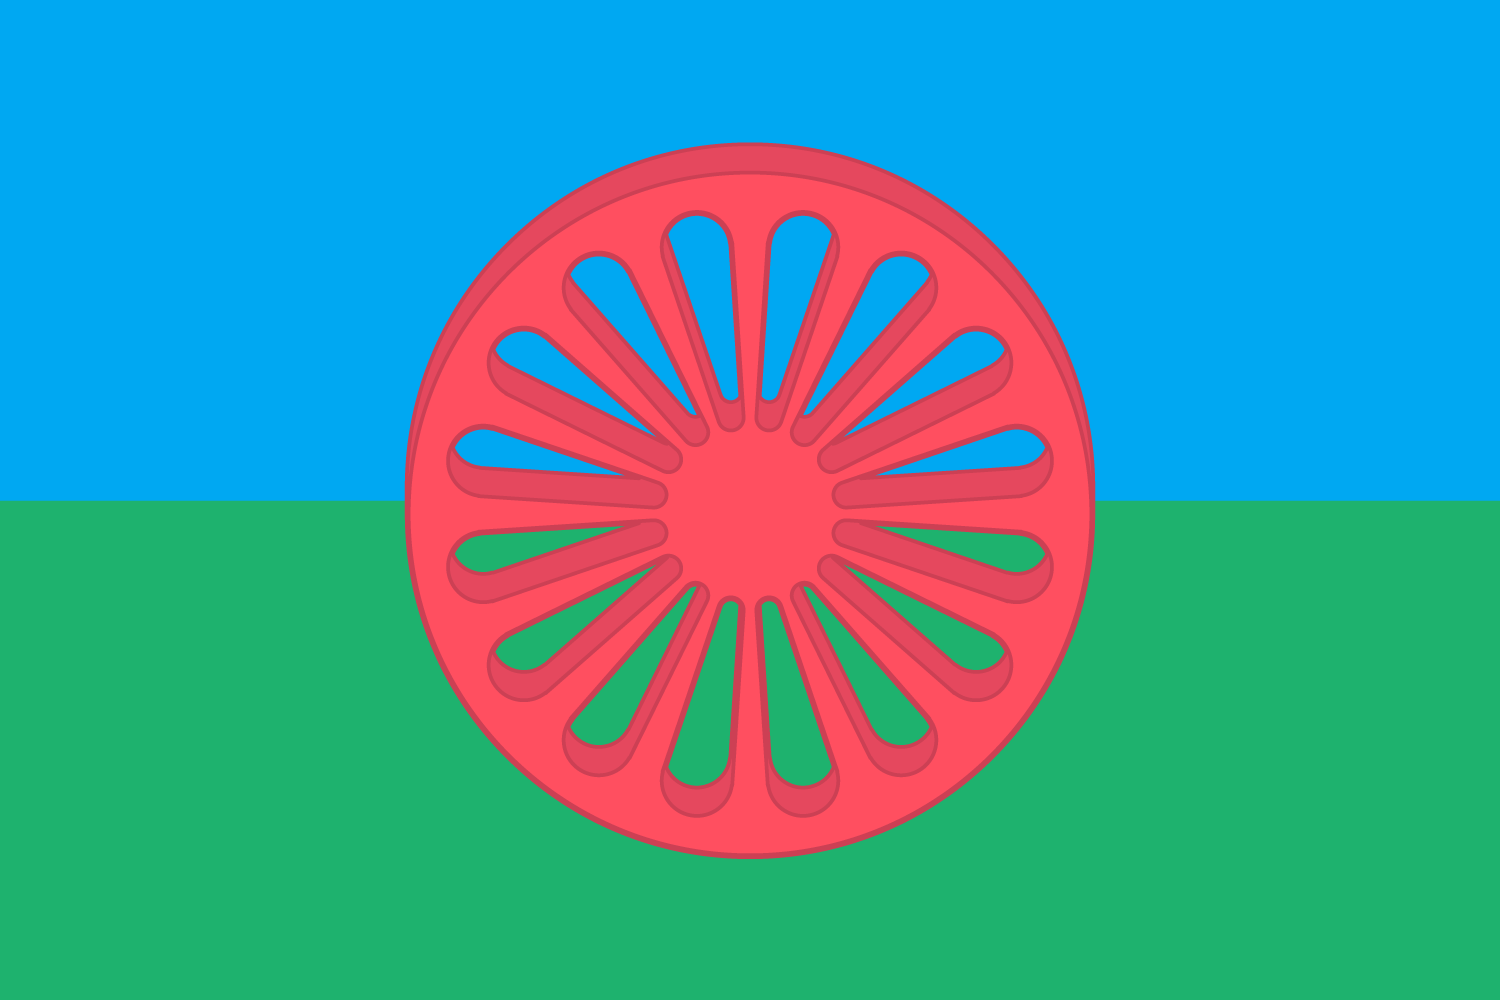 Rómska vlajka